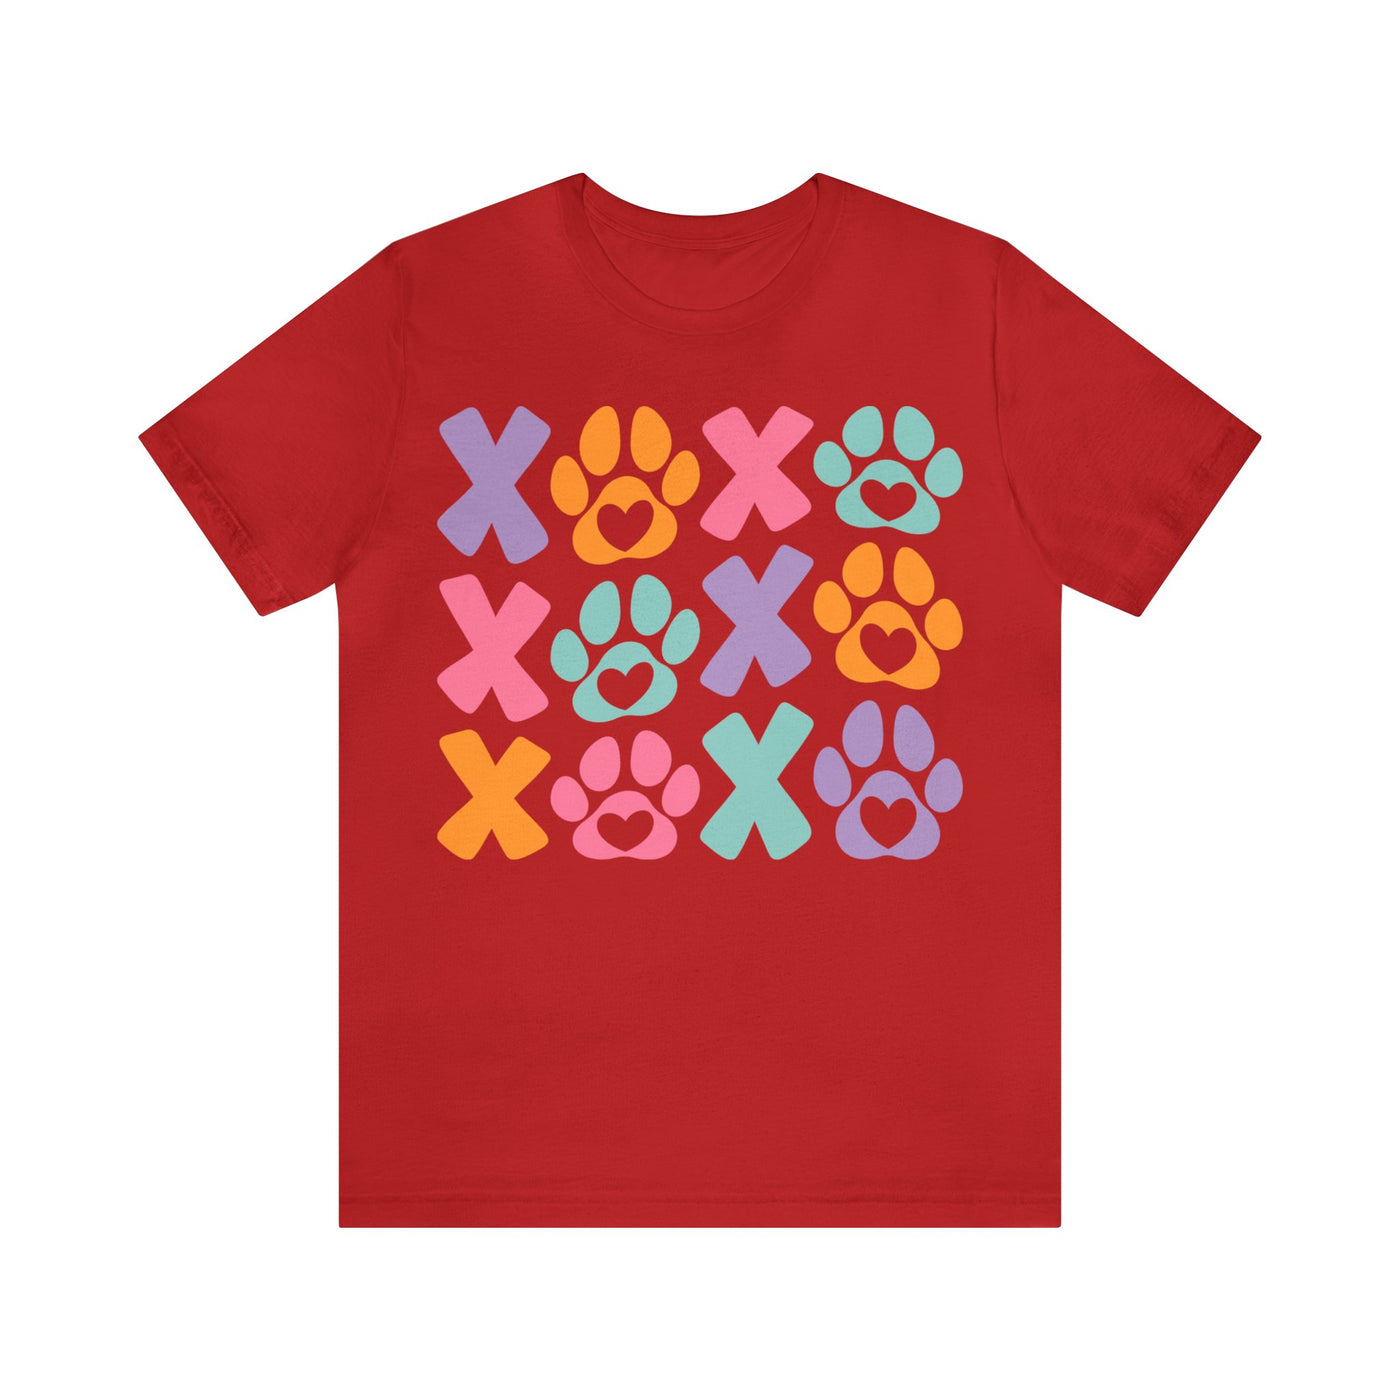 XOXO Colored Print T-Shirt